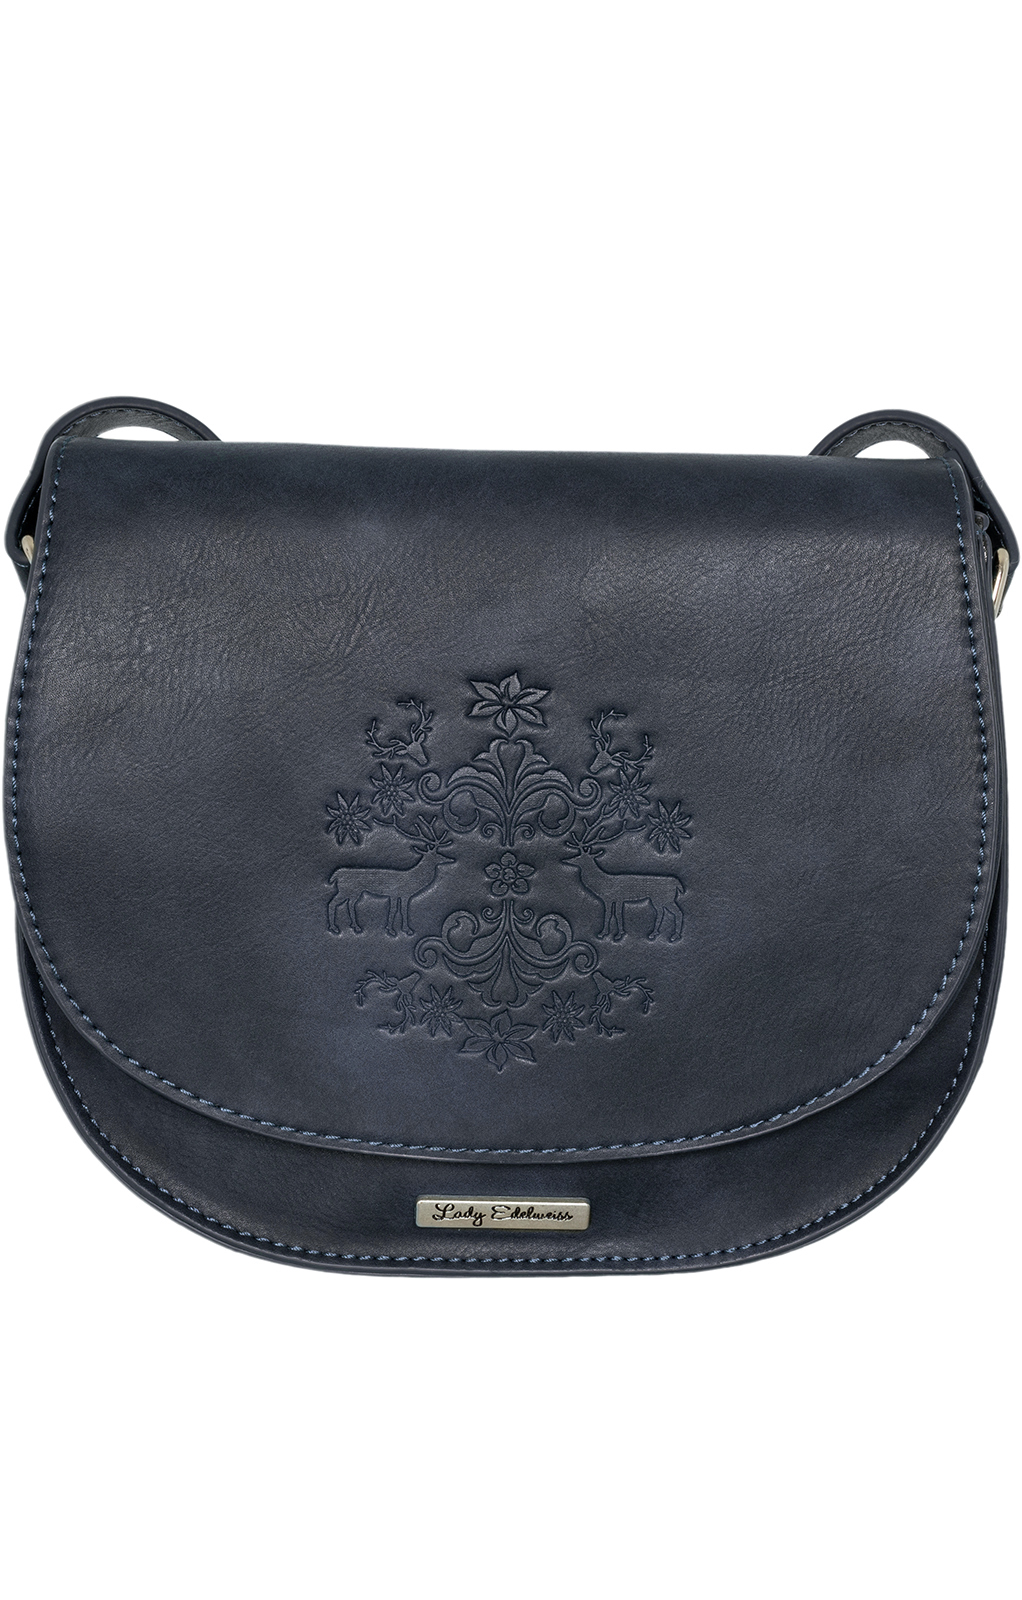 Traditional bag 13102 darkblue von Lady Edelweiss